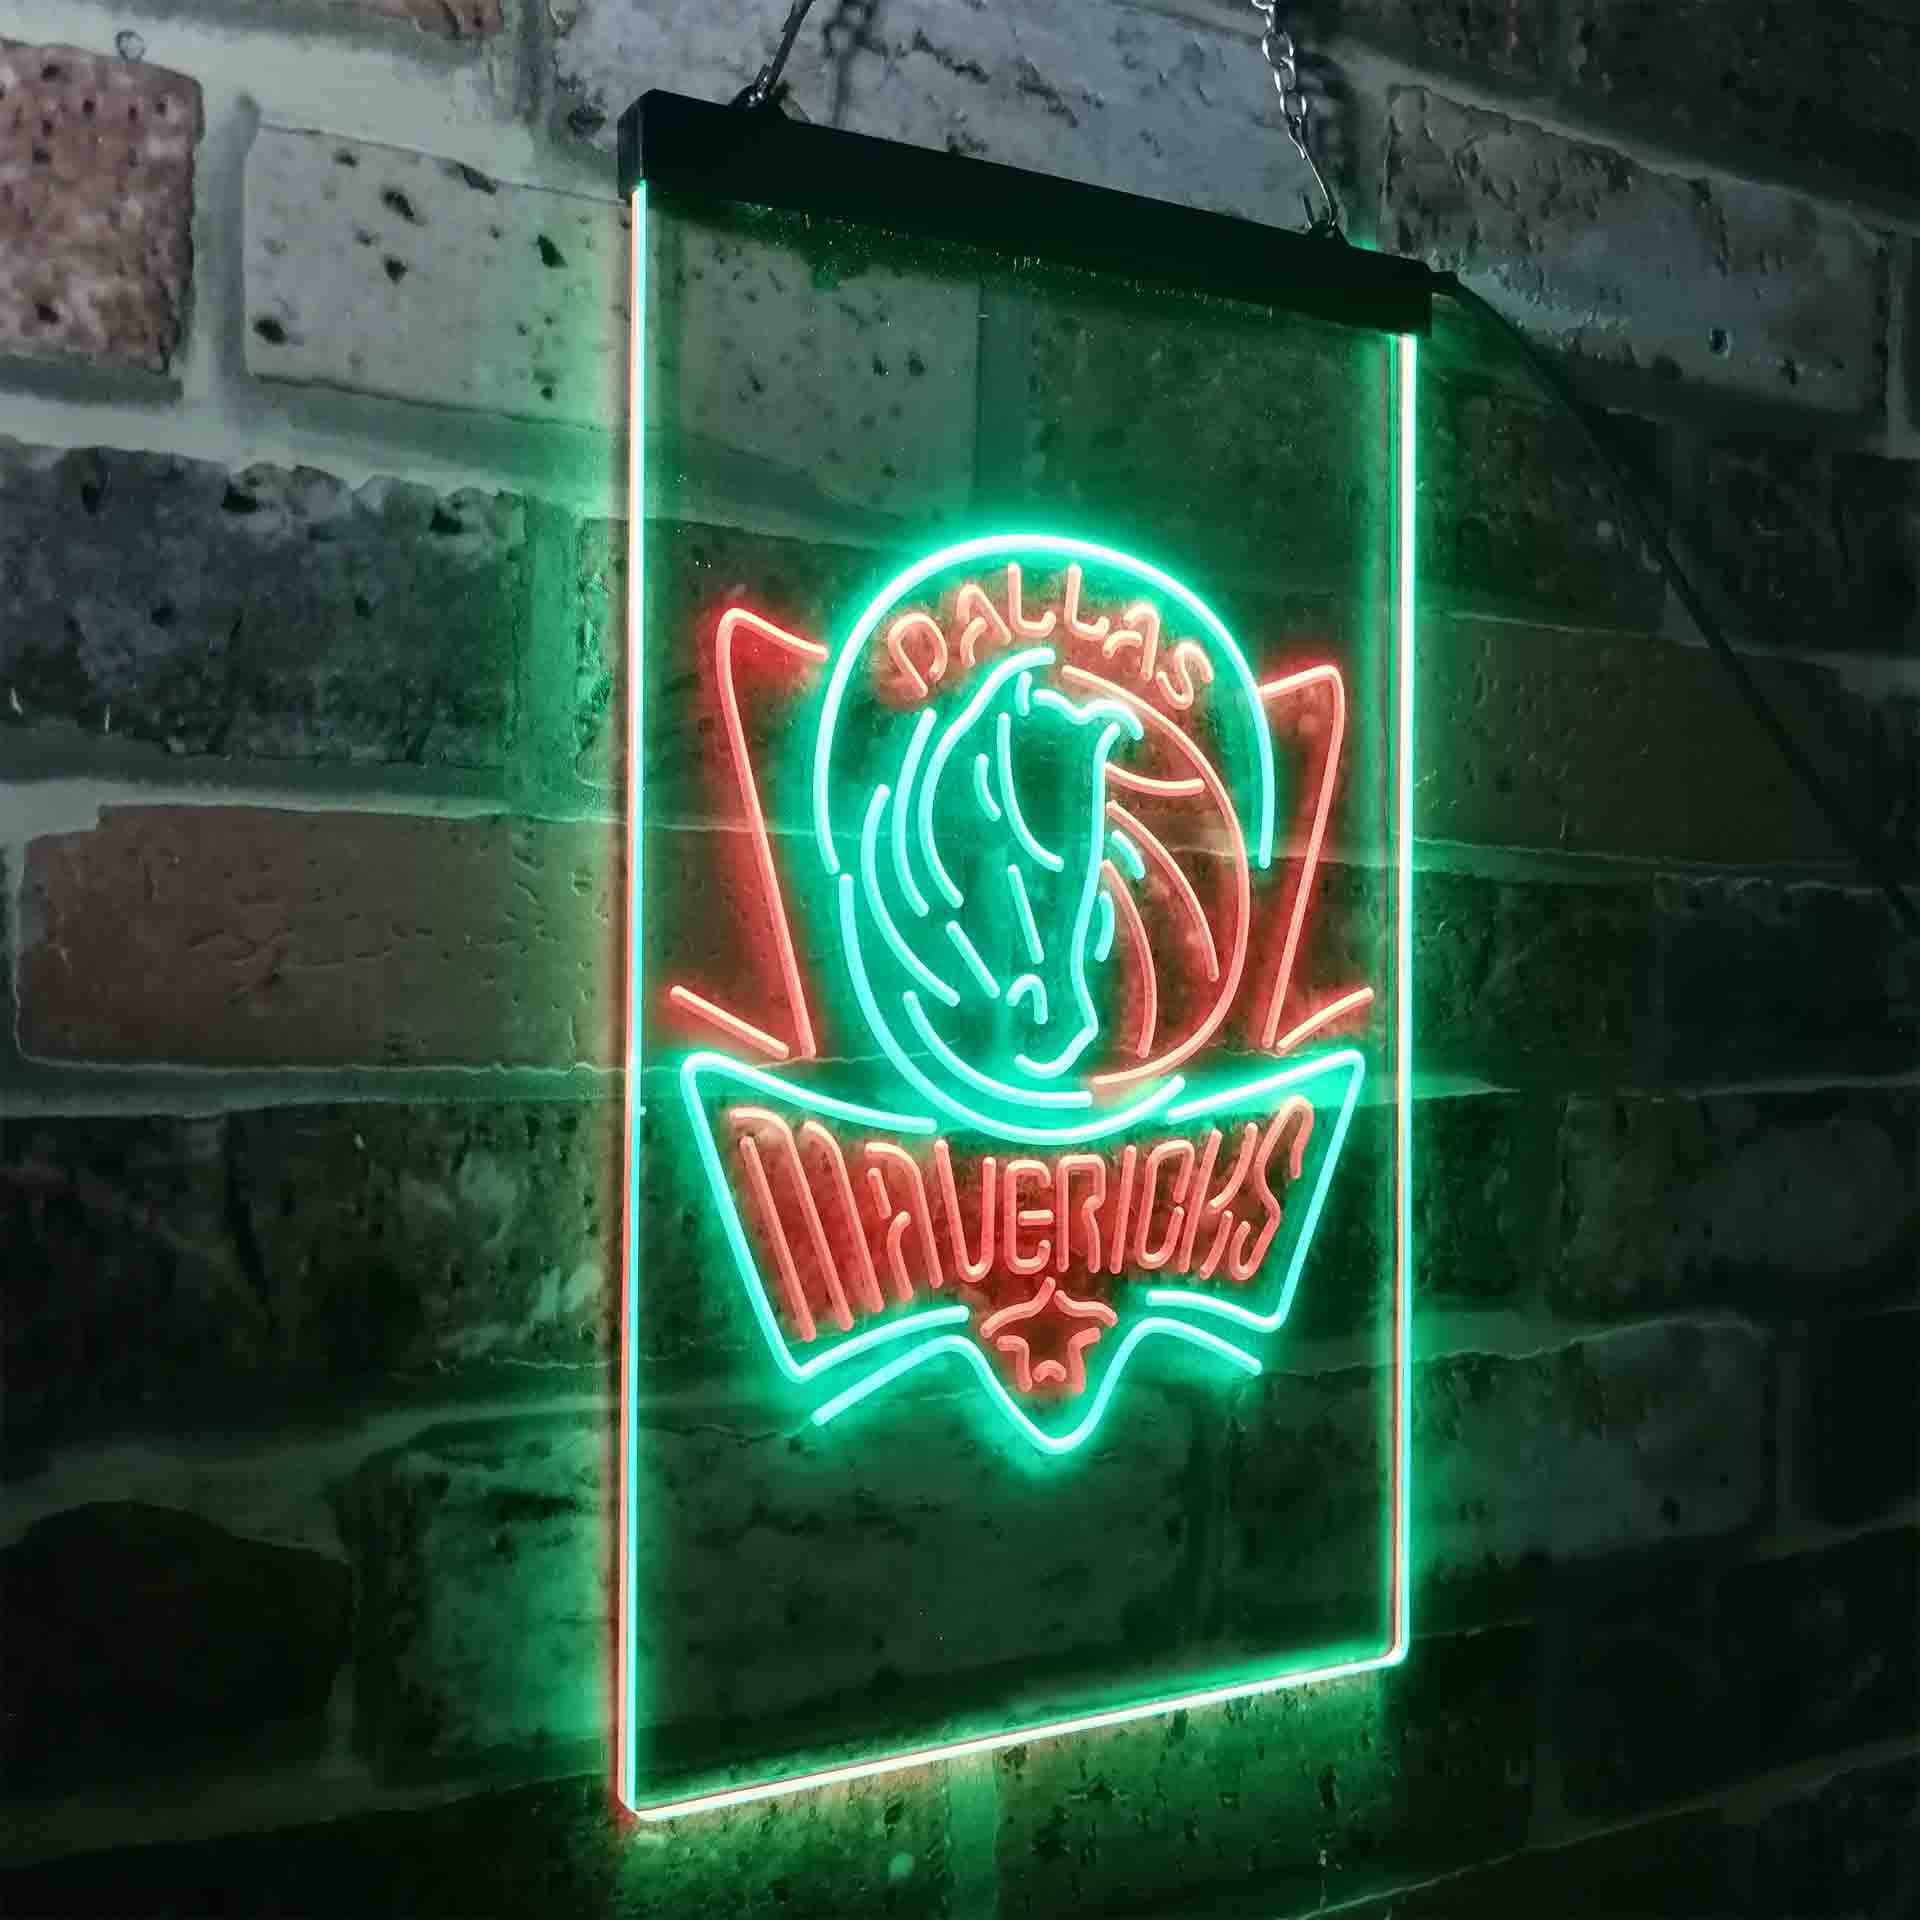 Mavericks Pub Club League Group Neon Light Up Sign Wall Decor